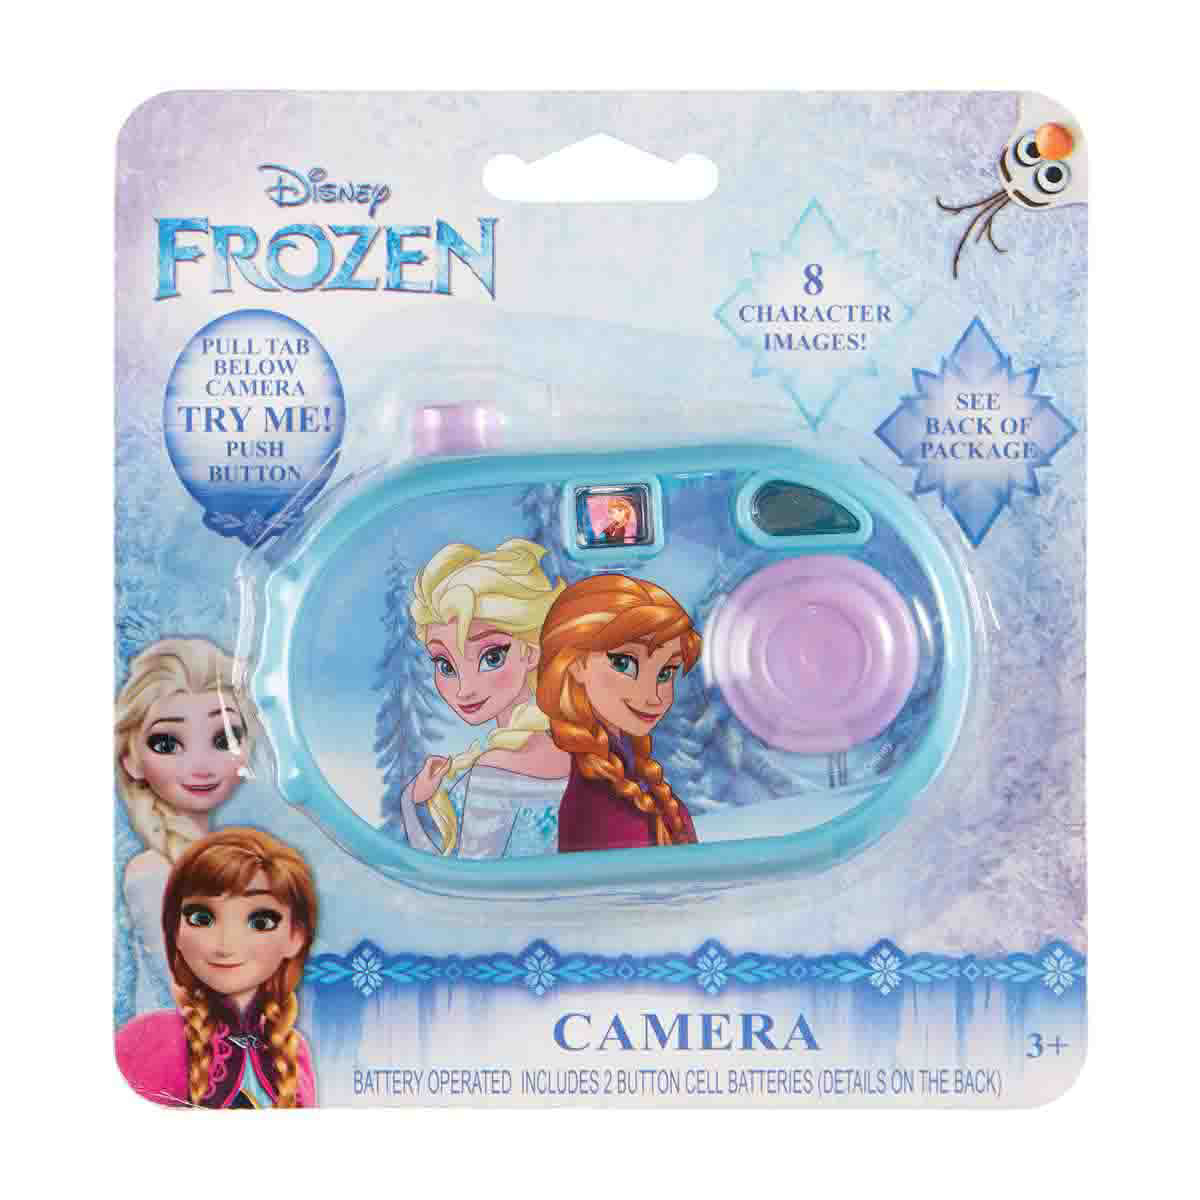 Disney Frozen Camera Toy